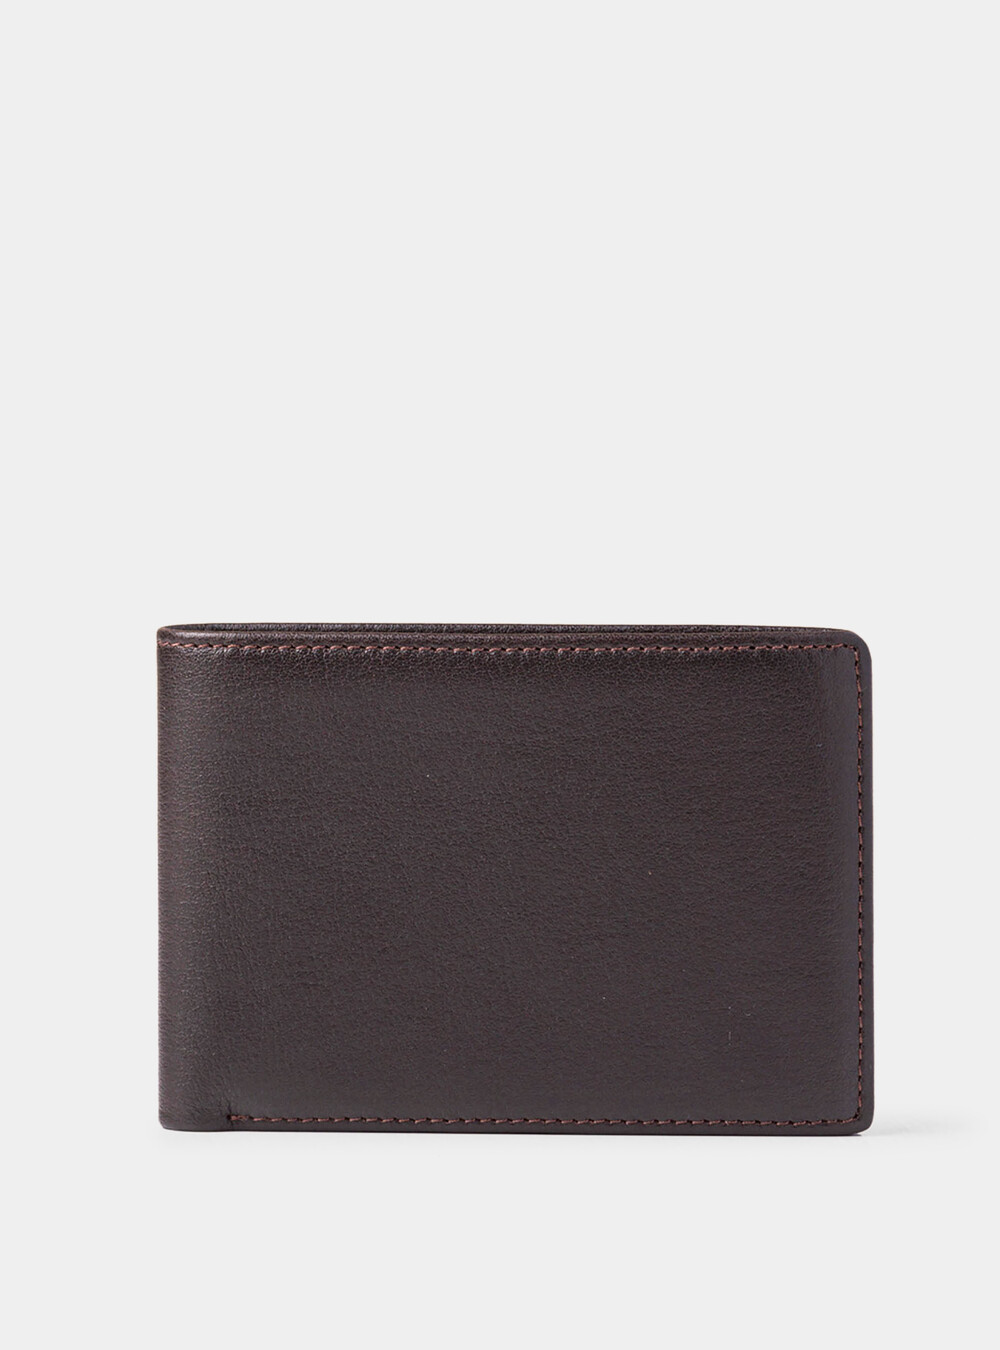 Smooth leather wallet | GutteridgeEU | Men's catalog-gutteridge-storefront